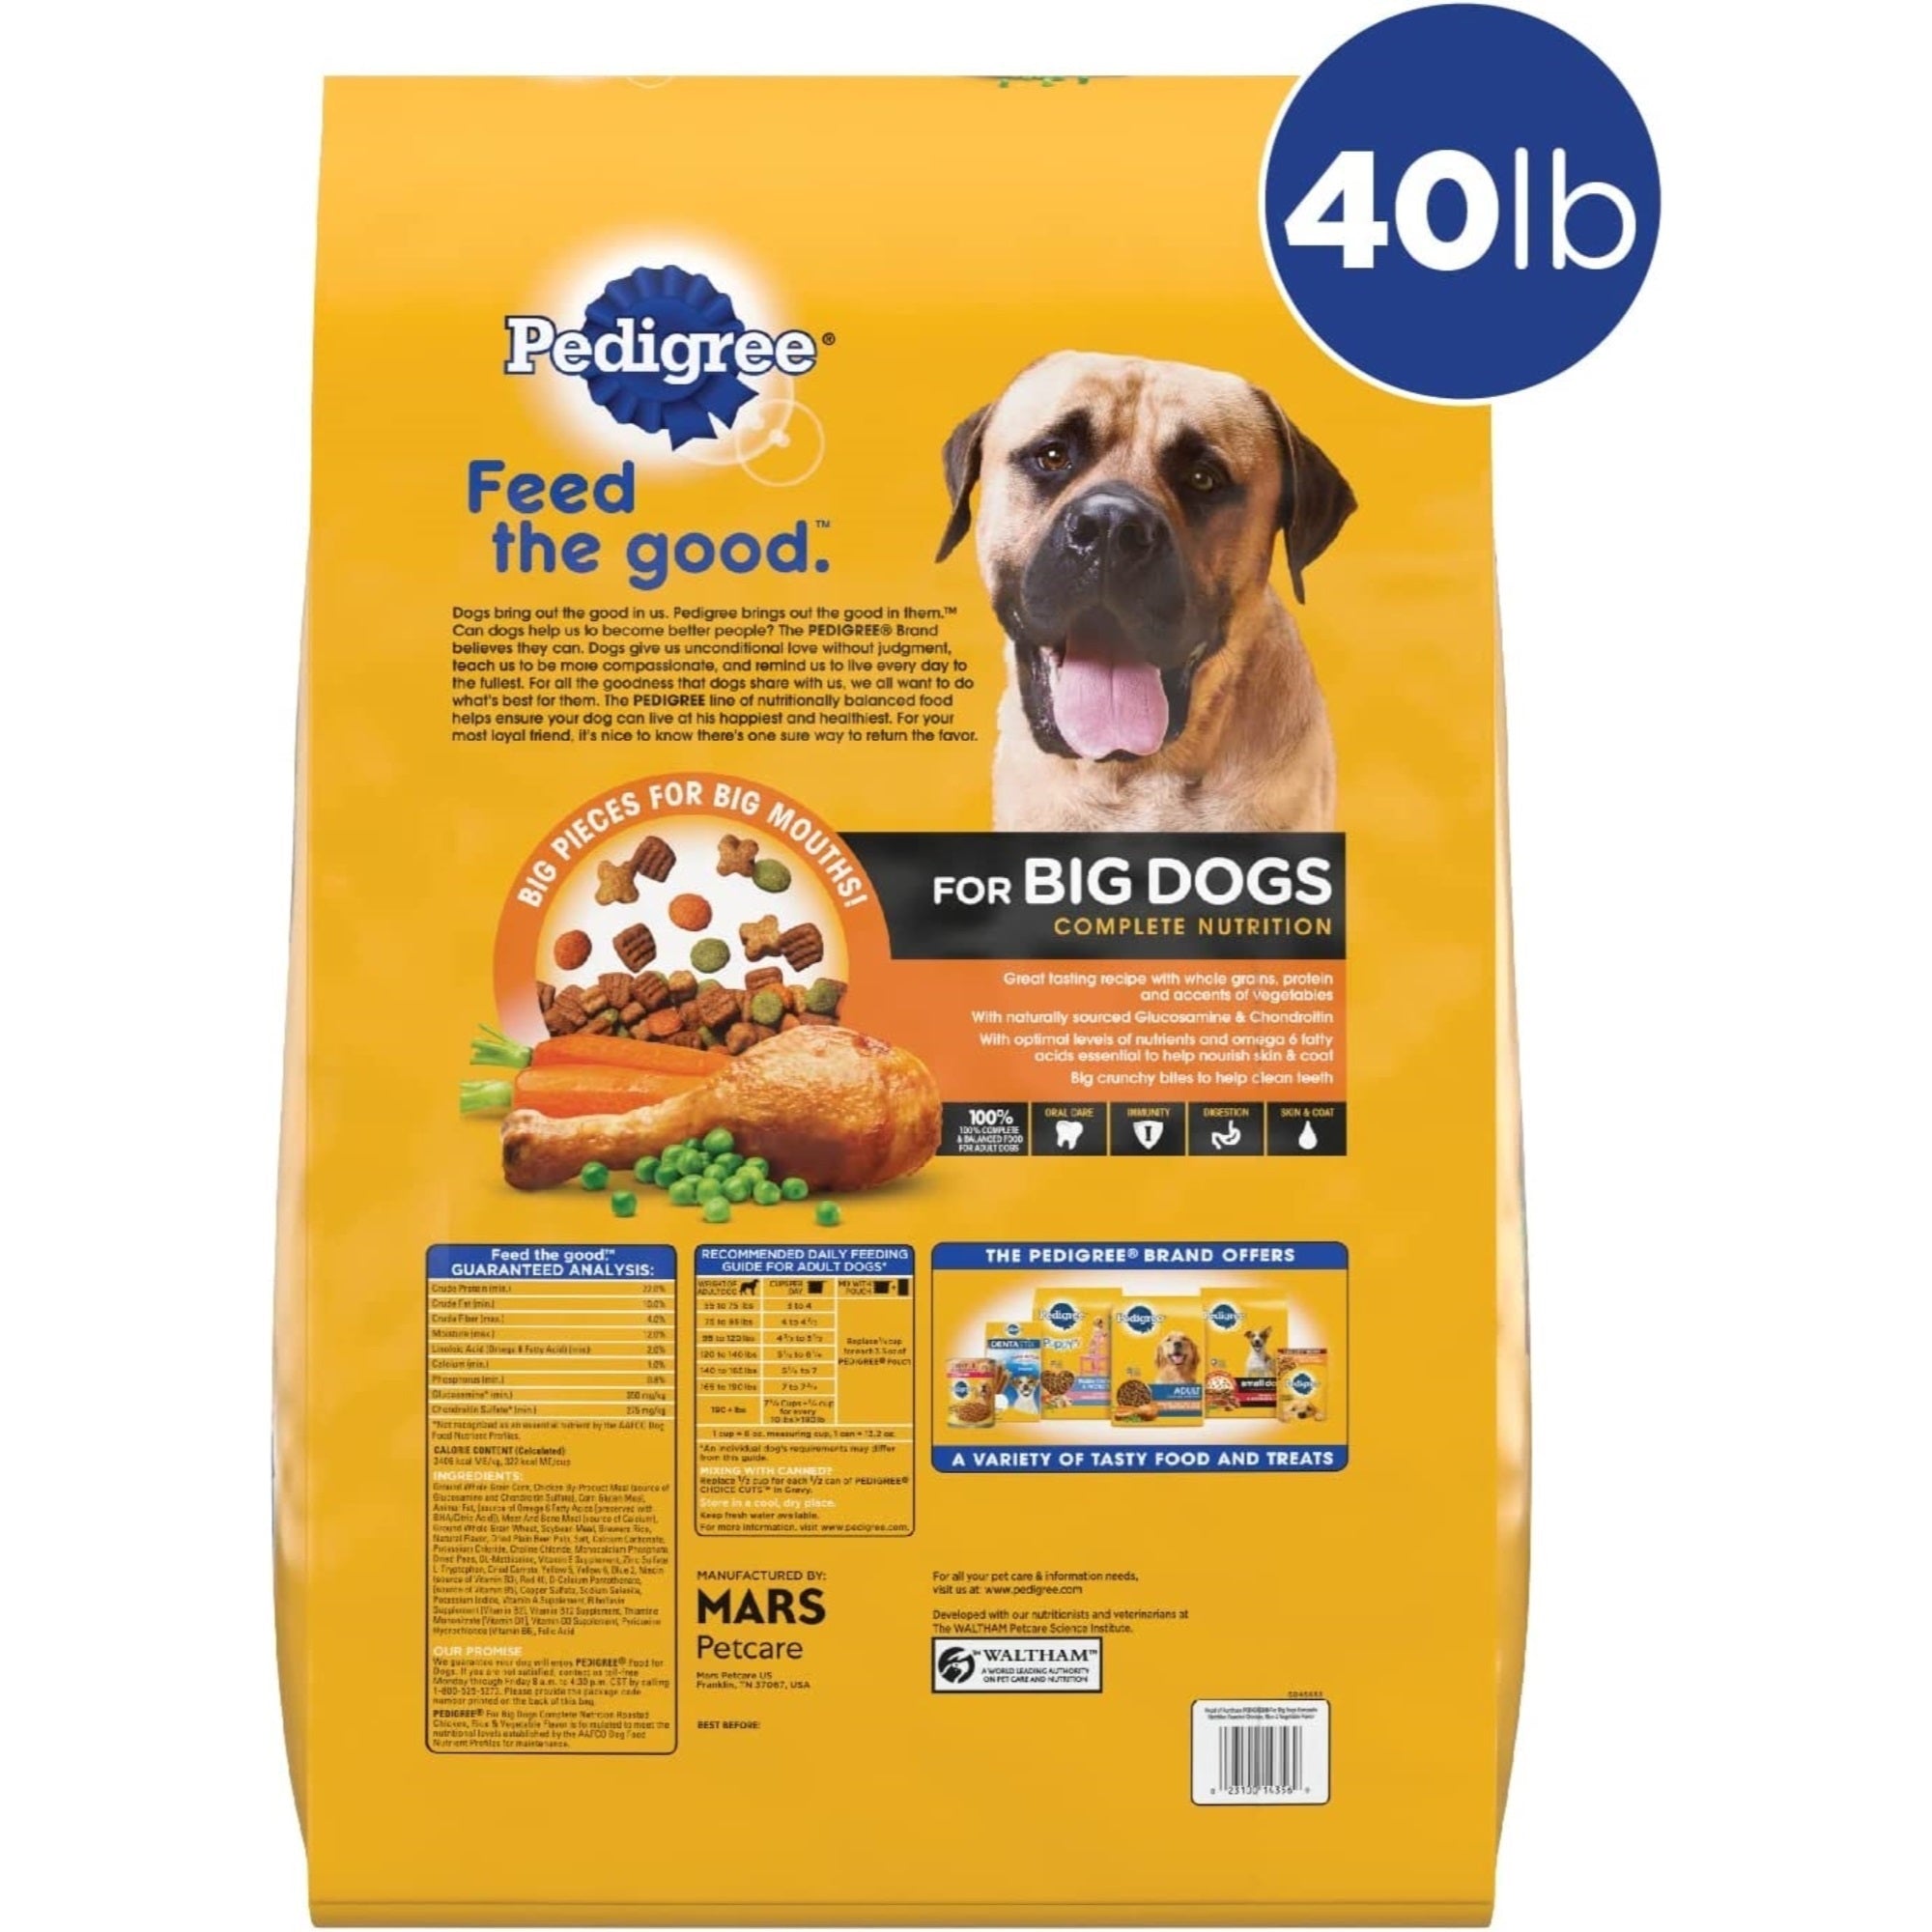 Pedigree Roasted Chicken, Rice & Vegetable Flavor Big Dogs Adult Complete Nutrition Dry Dog Food, 40 LB